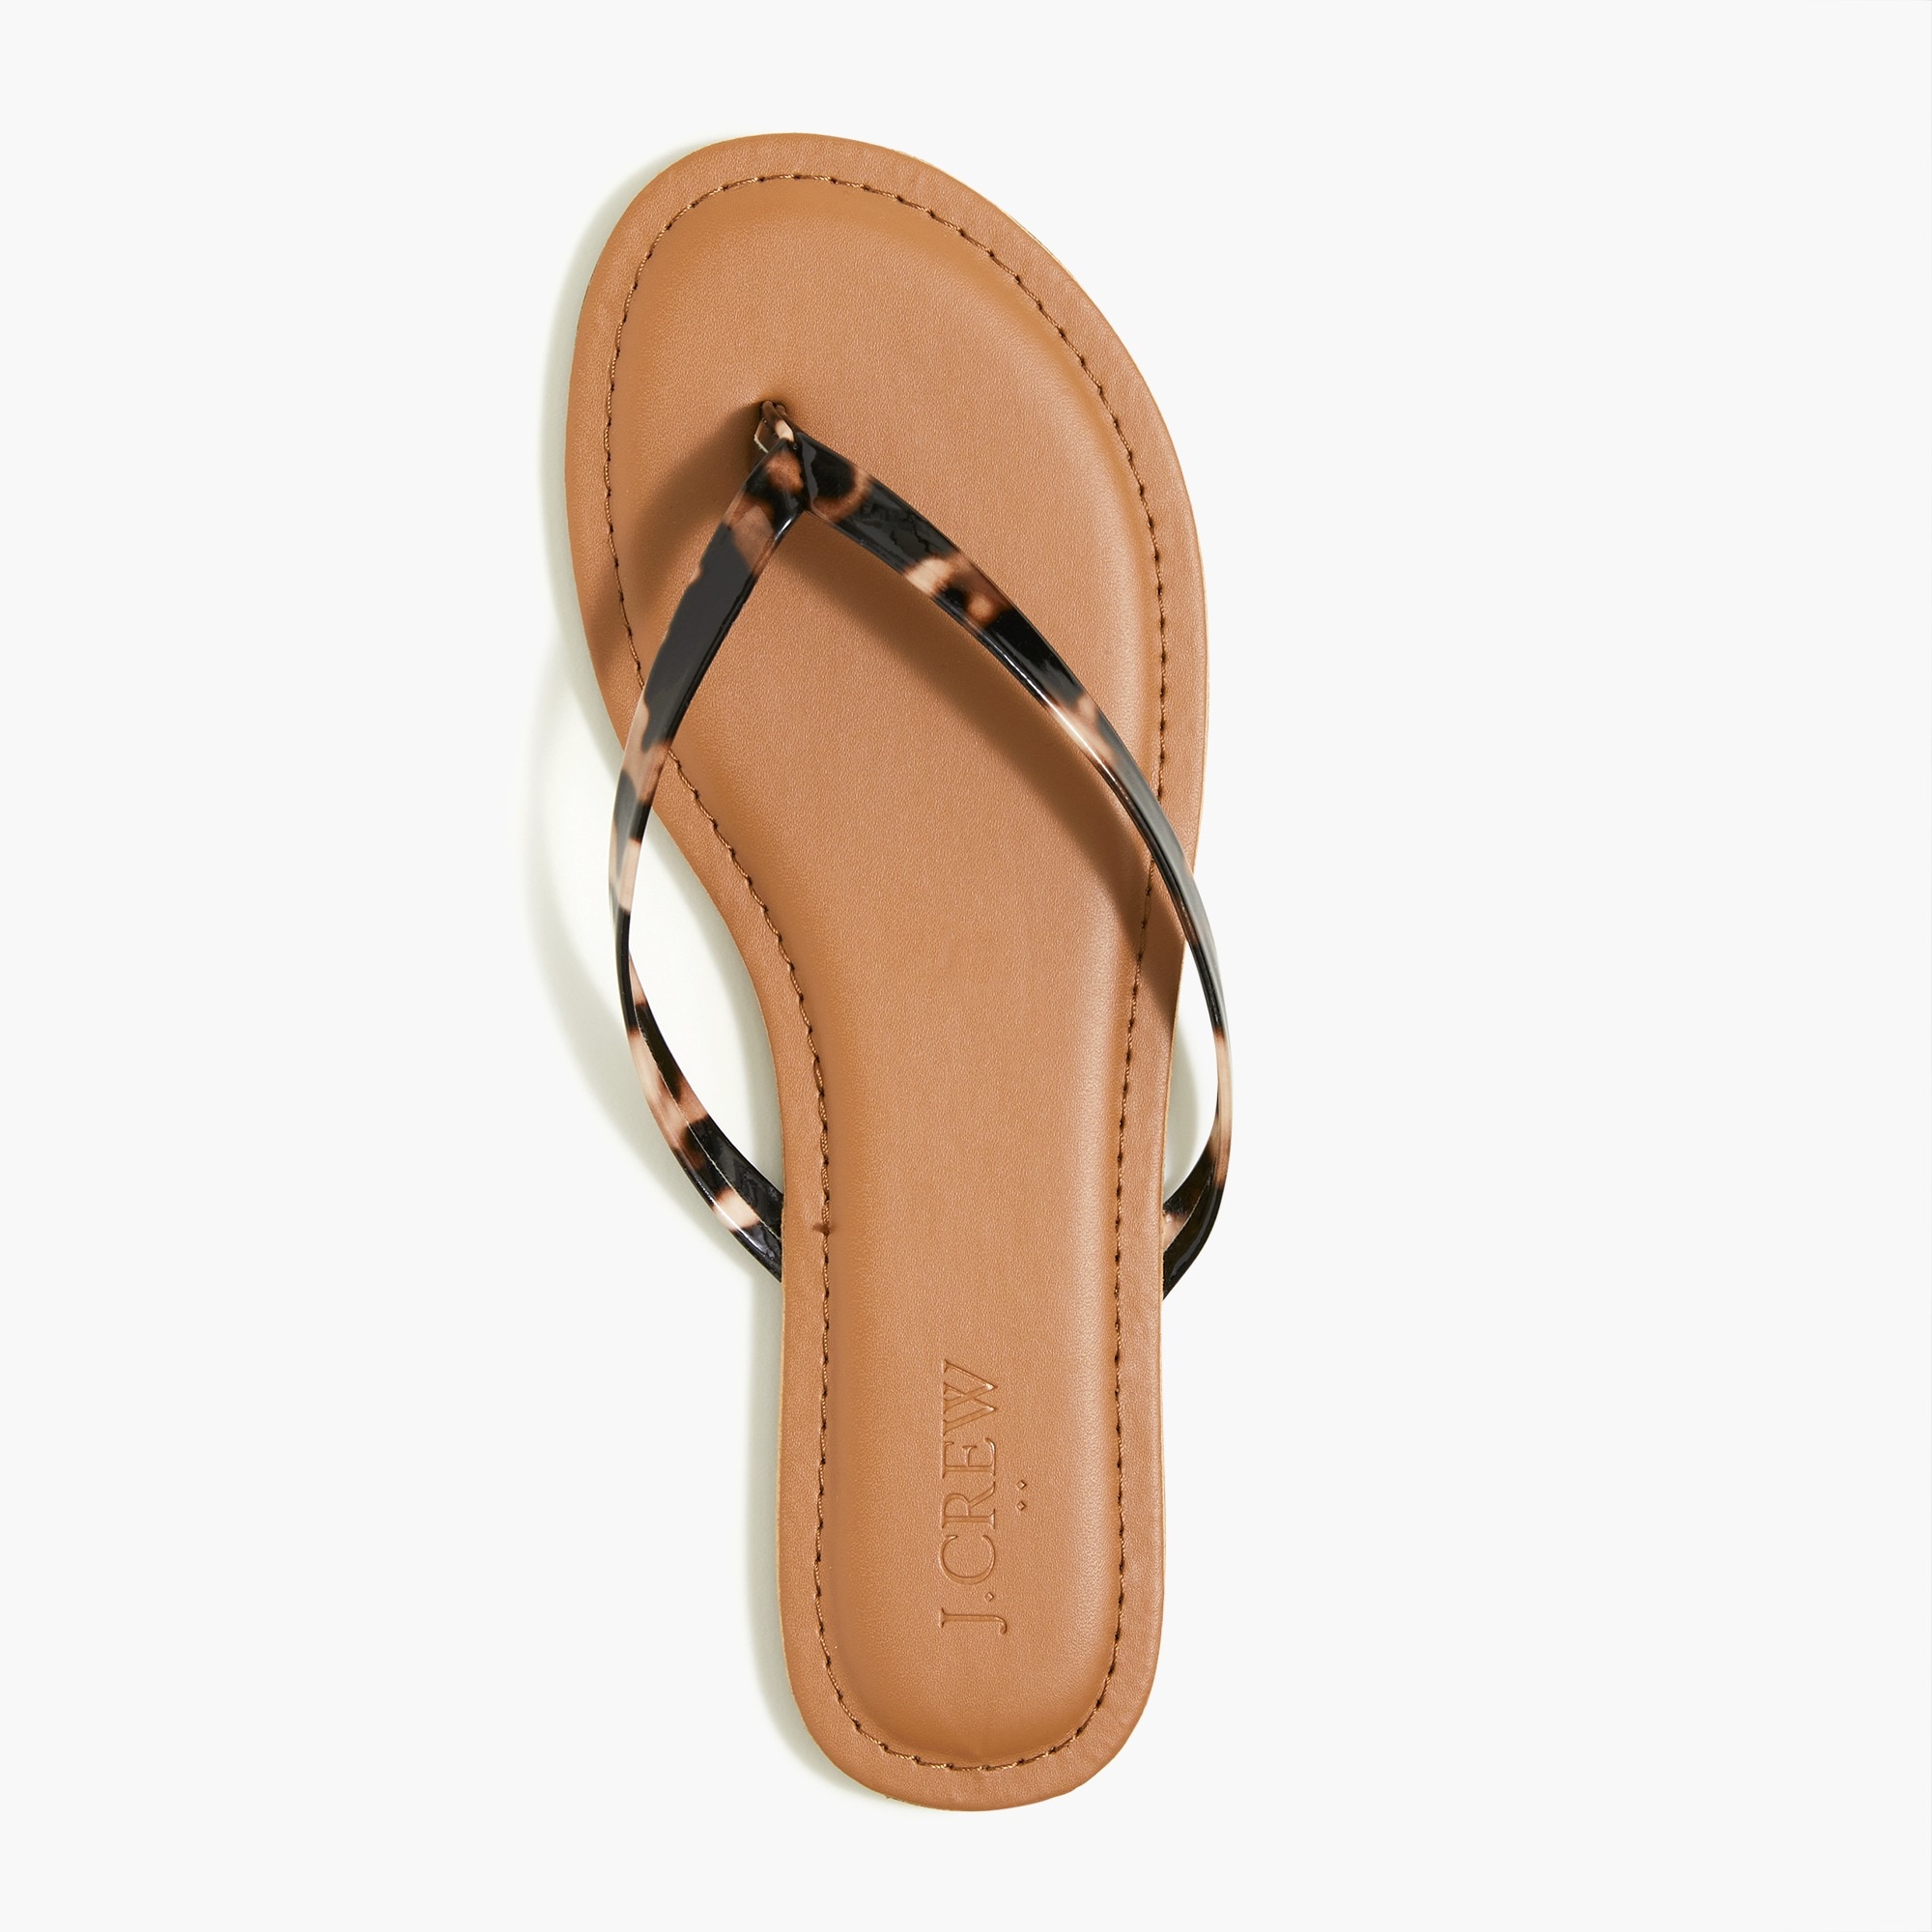 Easy summer flip-flops